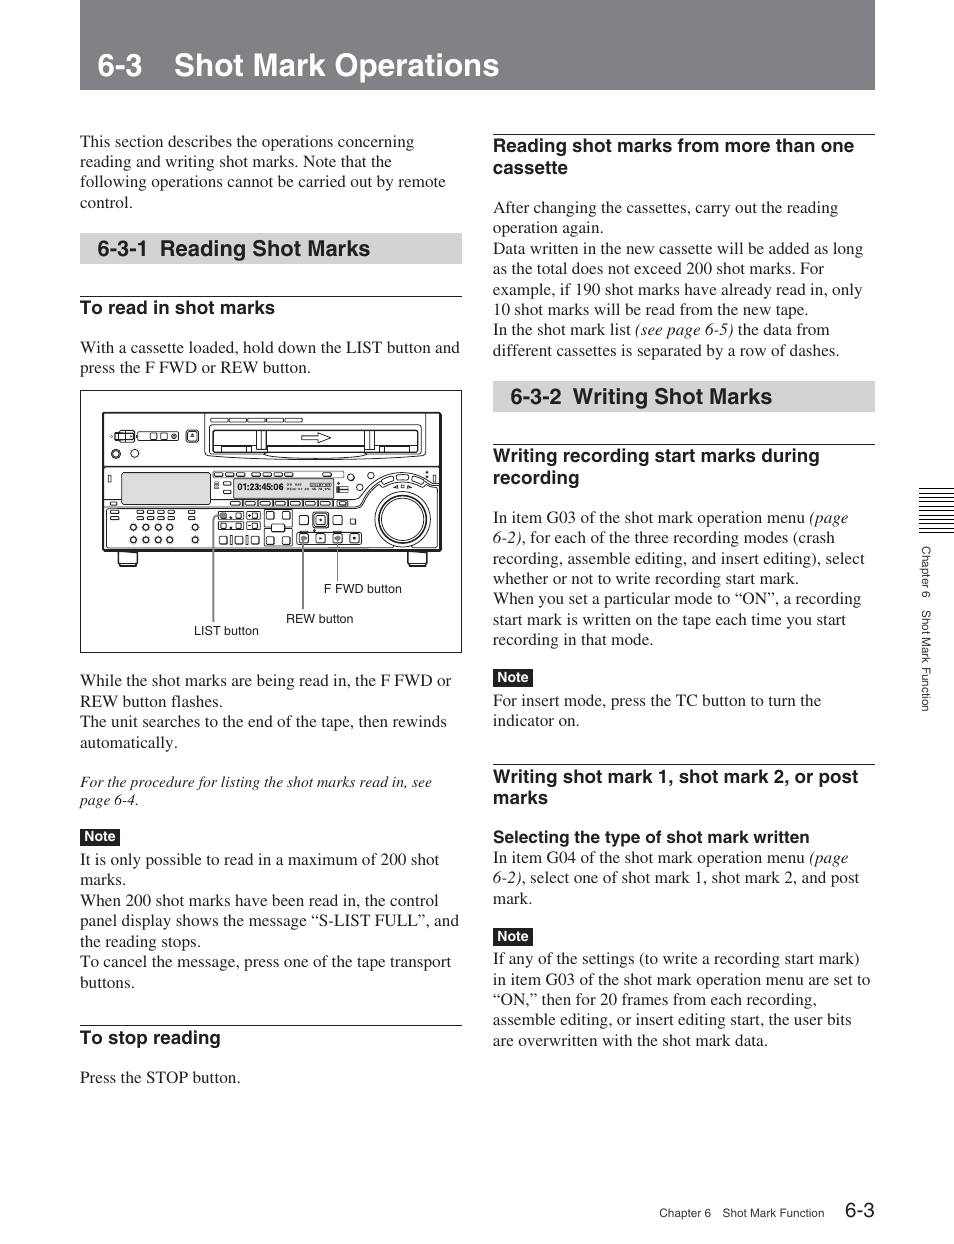 3 shot mark operations, 3-1 reading shot marks, 3-2 writing shot marks | Sony DVW-2000 User Manual | Page 73 / 155